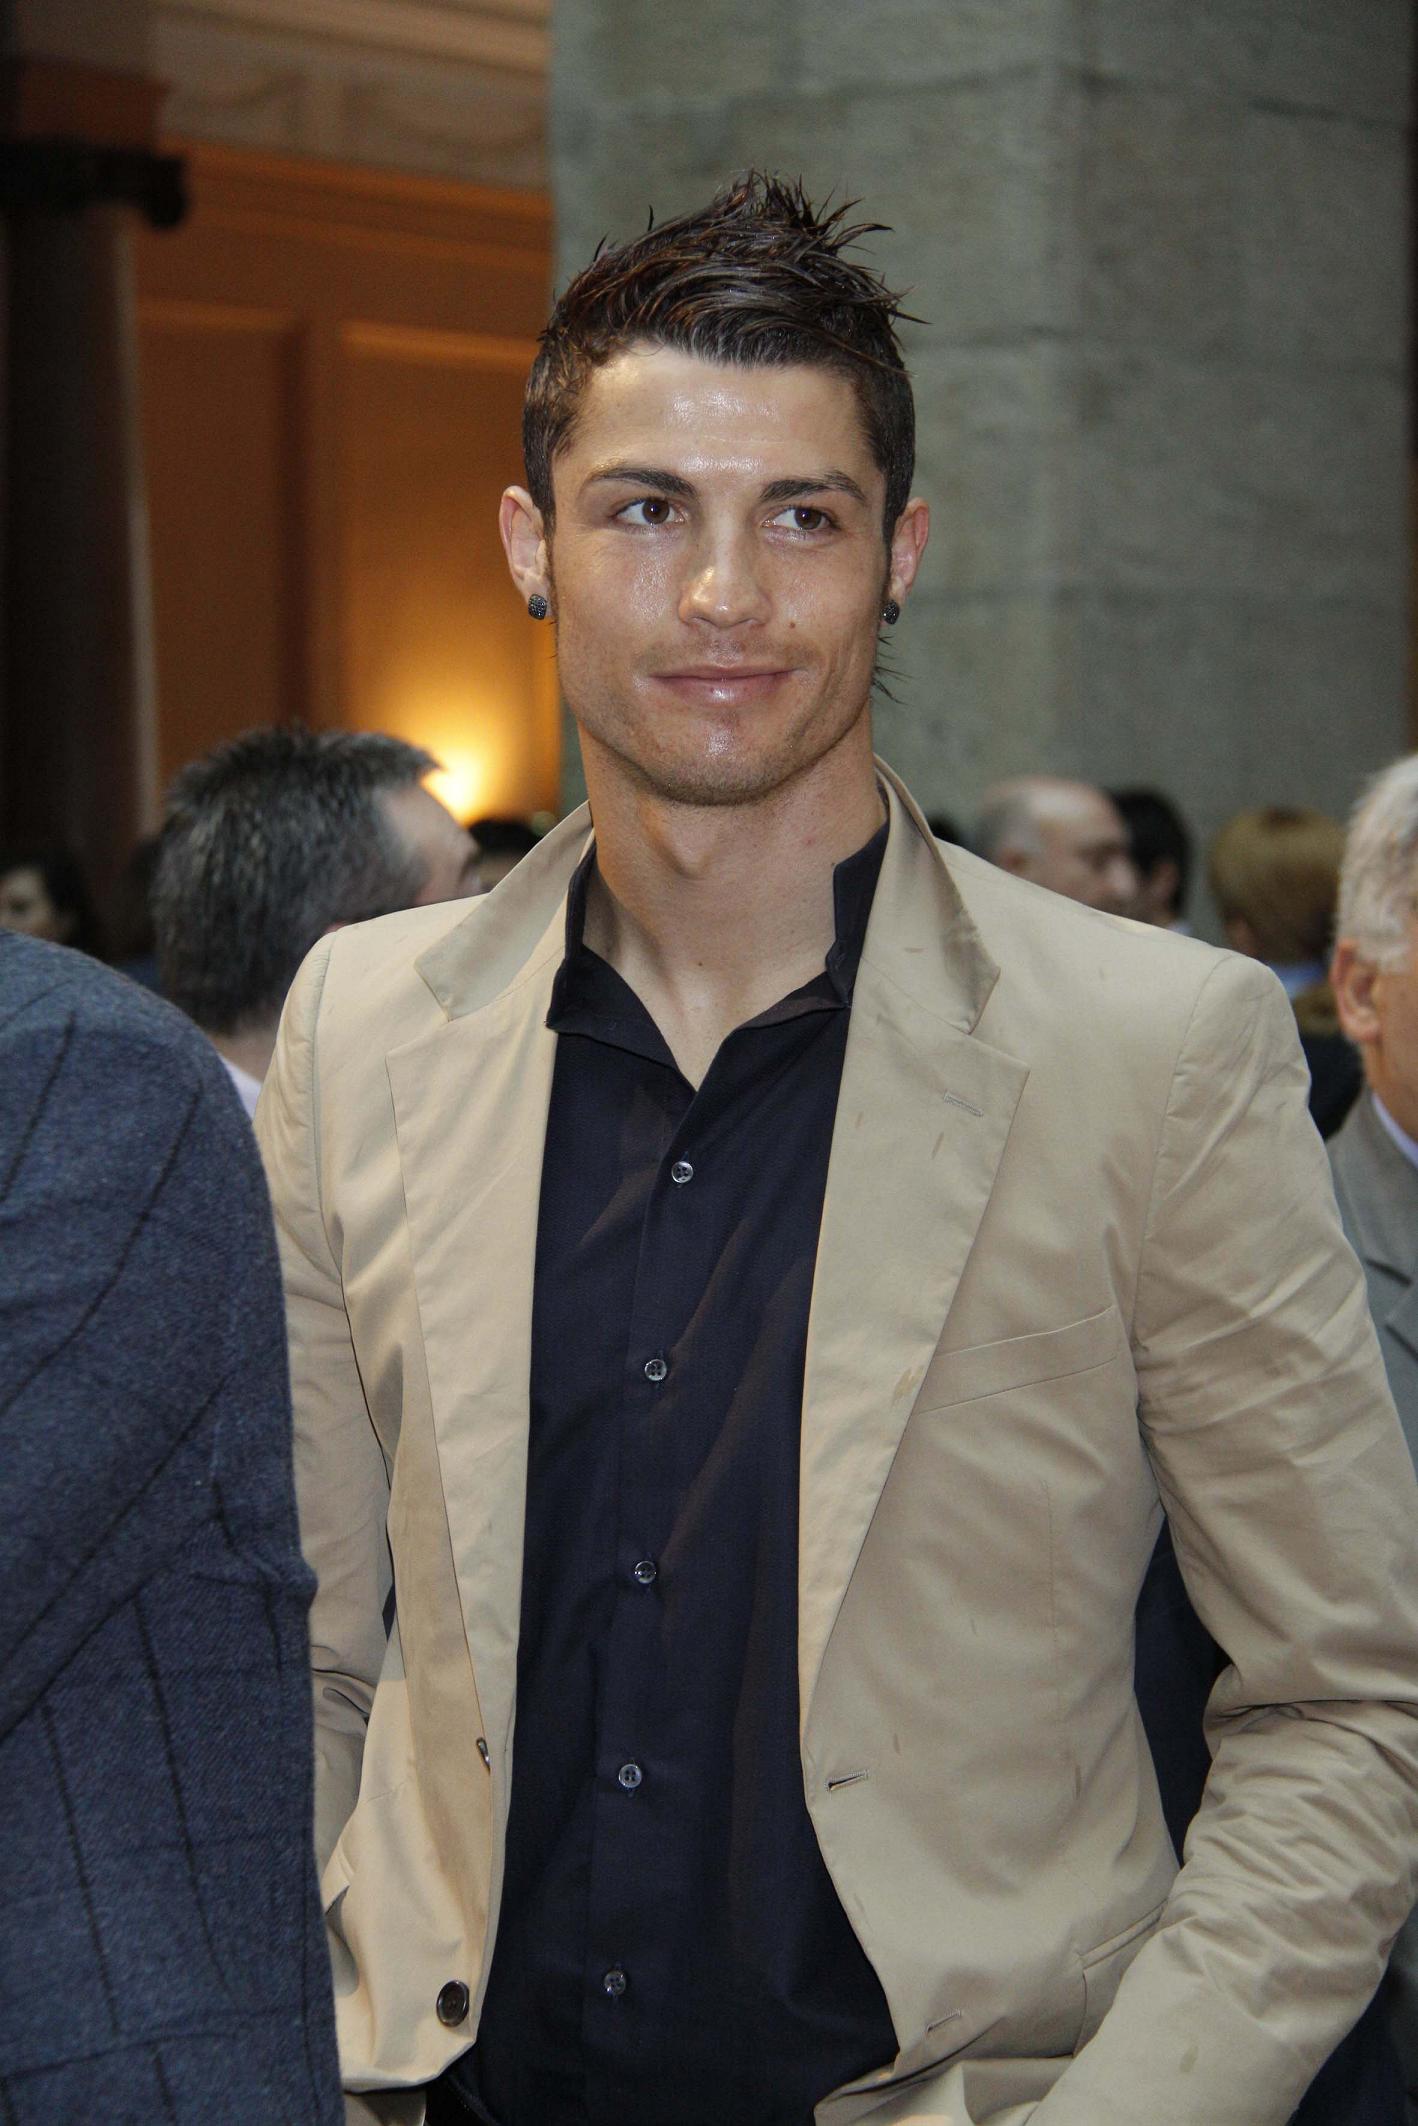 Cristiano Ronaldo photo 181 of 658 pics, wallpaper - photo #244292 ...